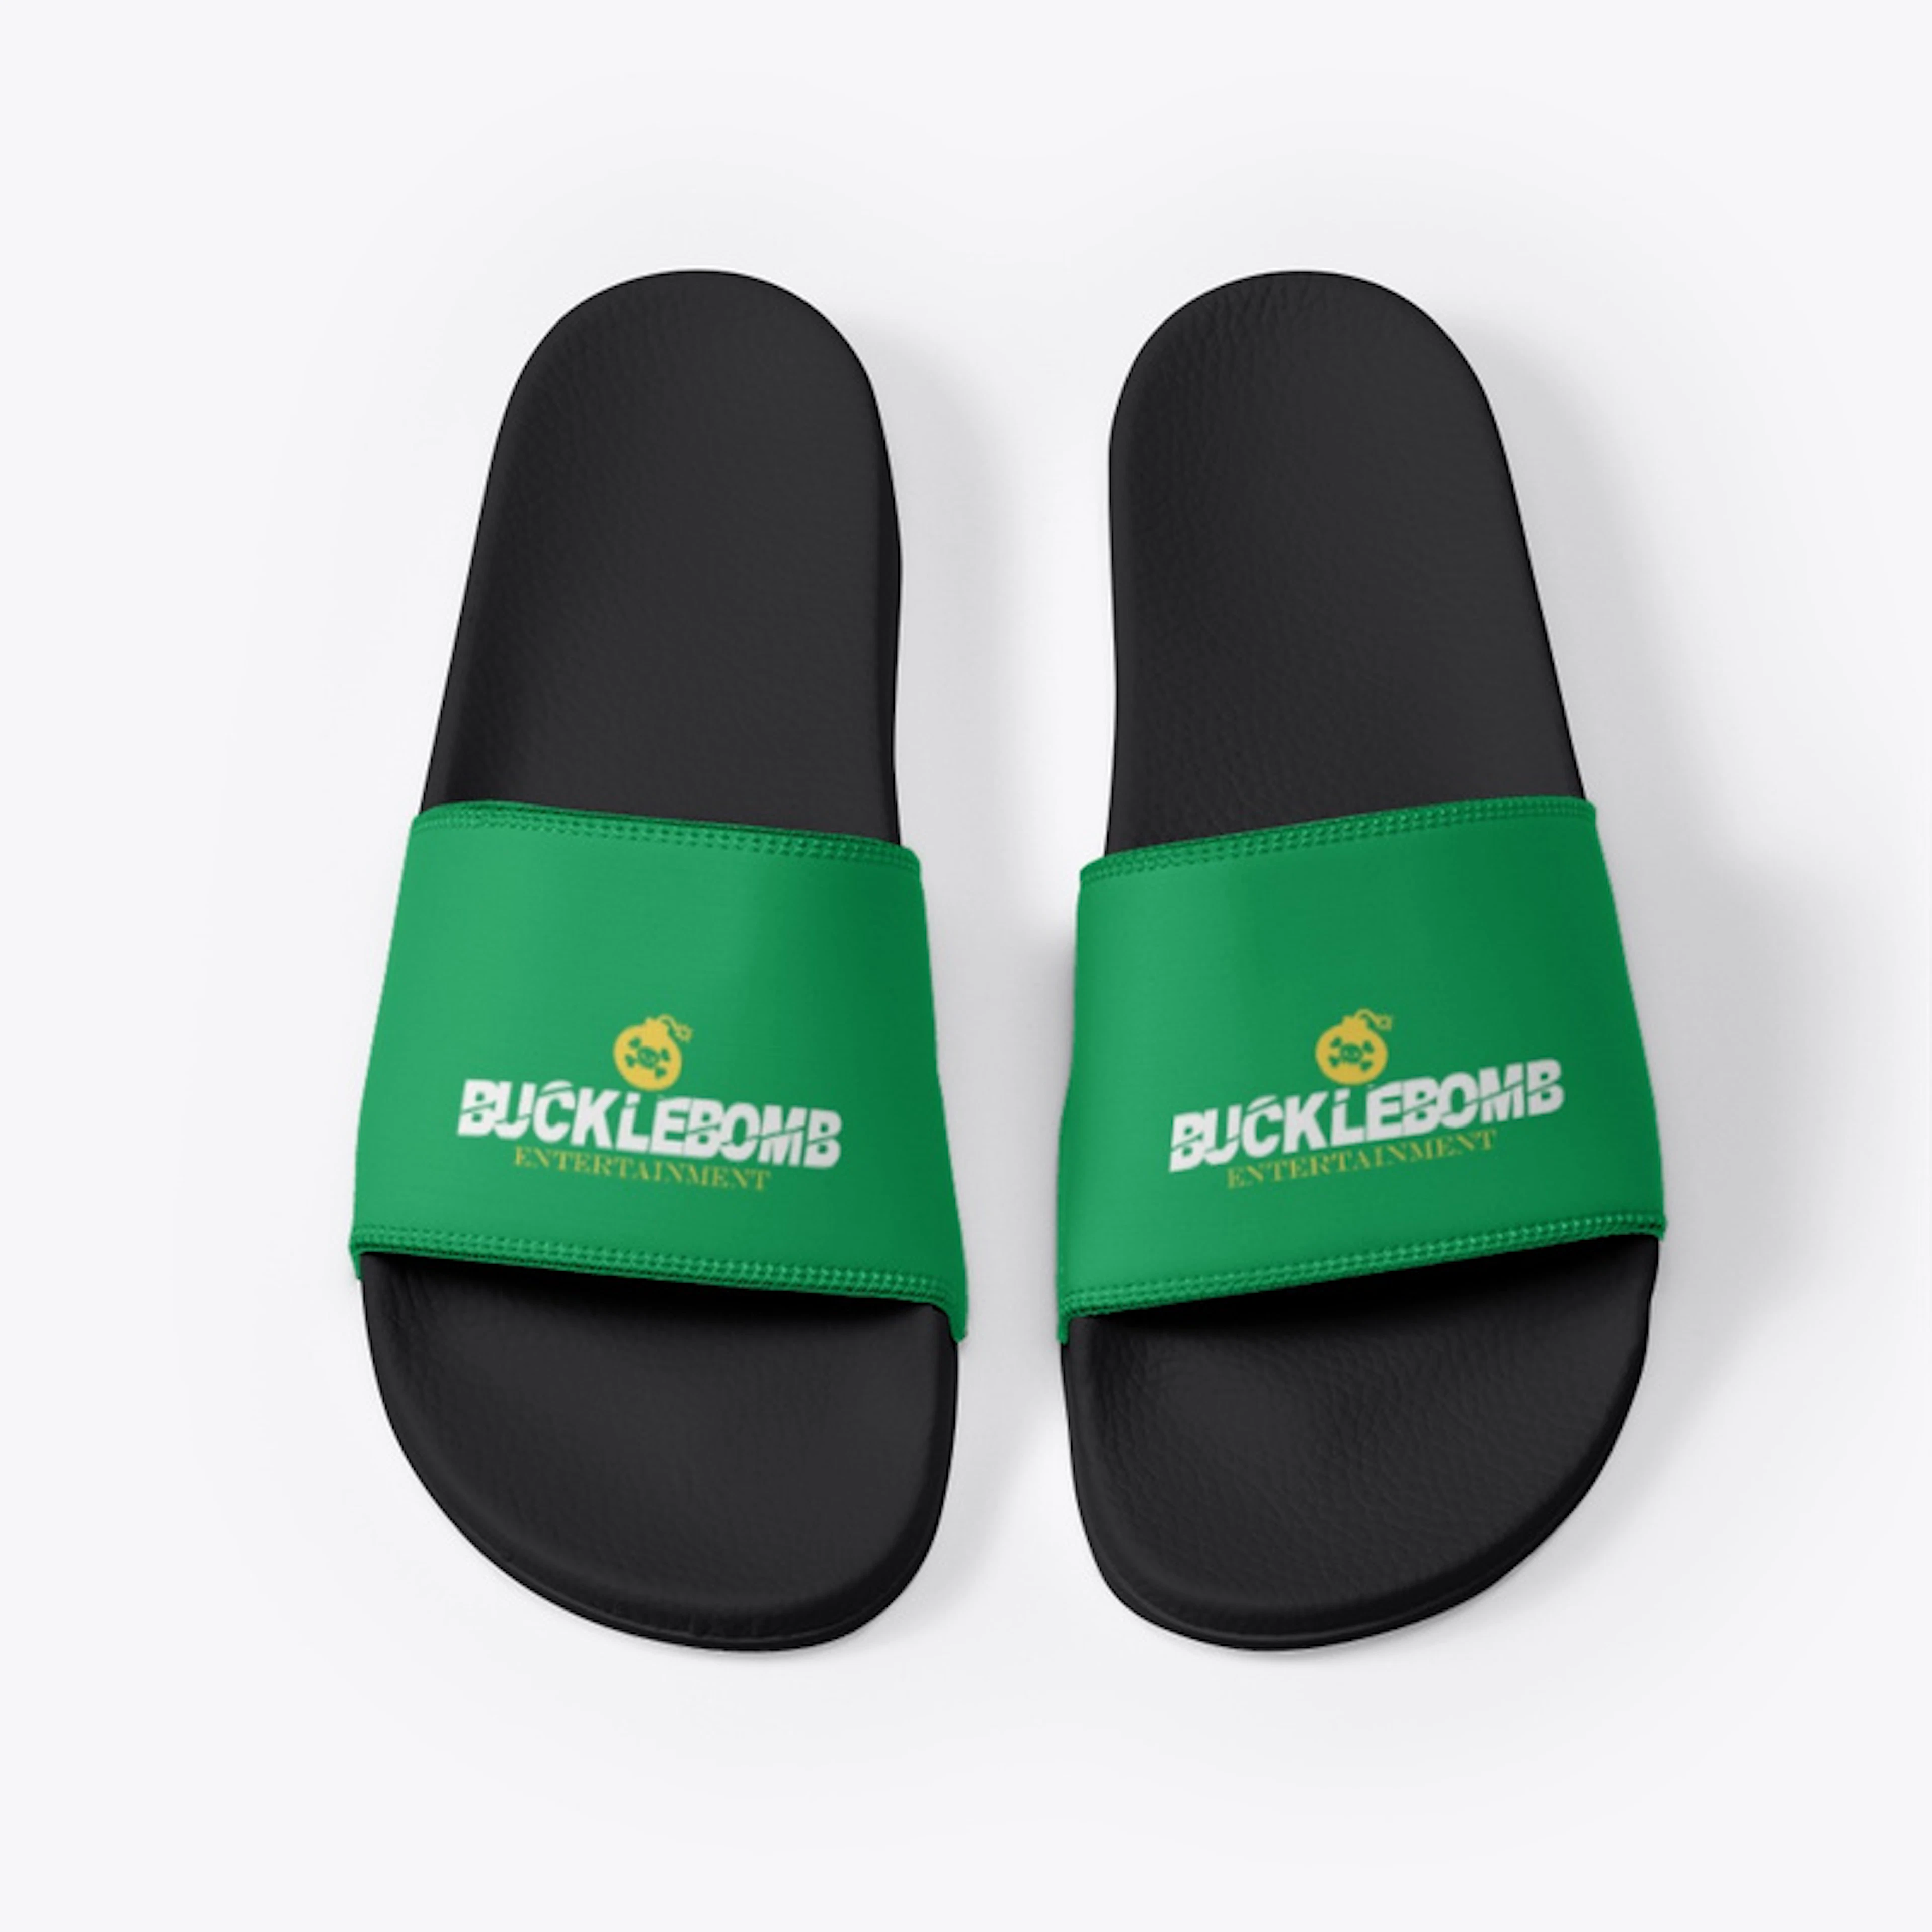 Bucklebomb Logo Sandals